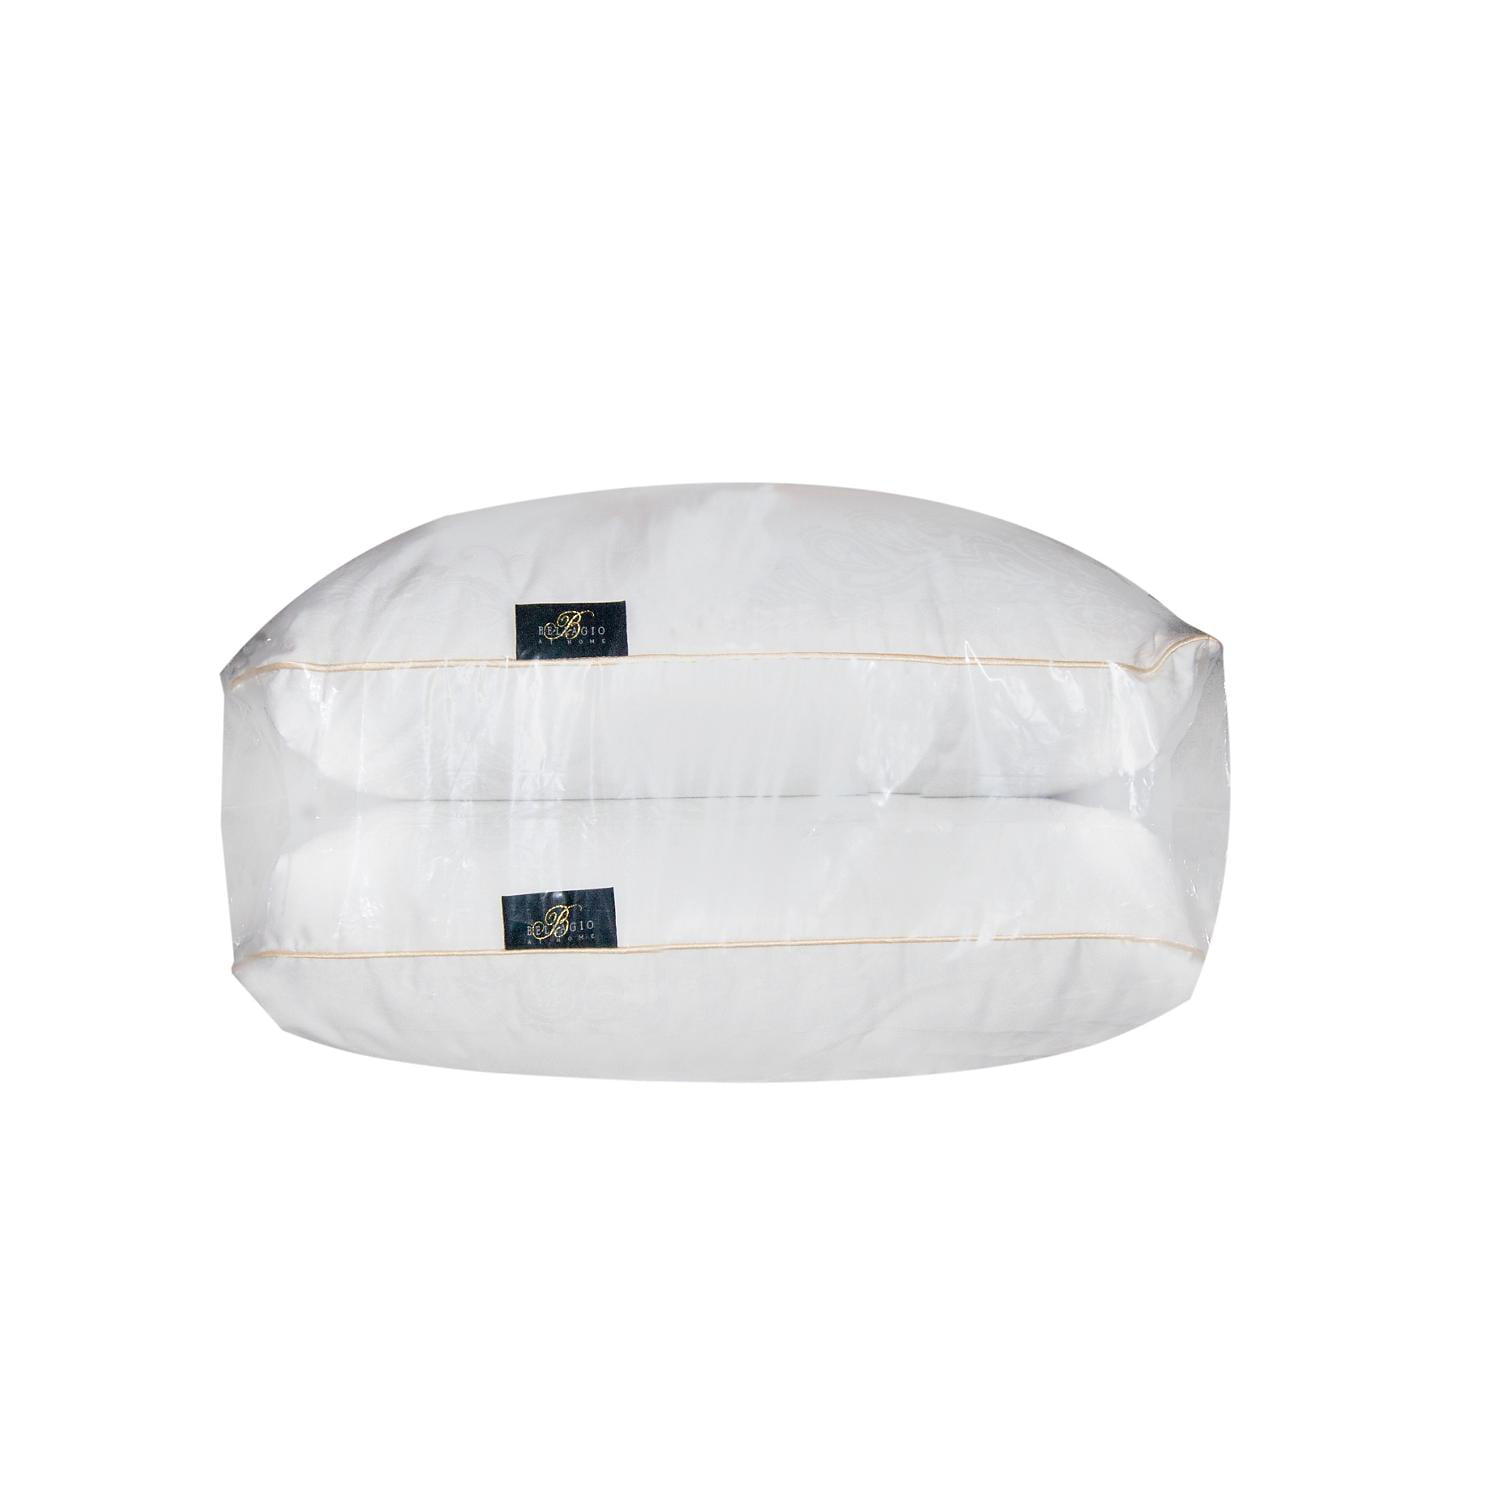 Bellagio White Plain Pillows, Shape: Rectangular